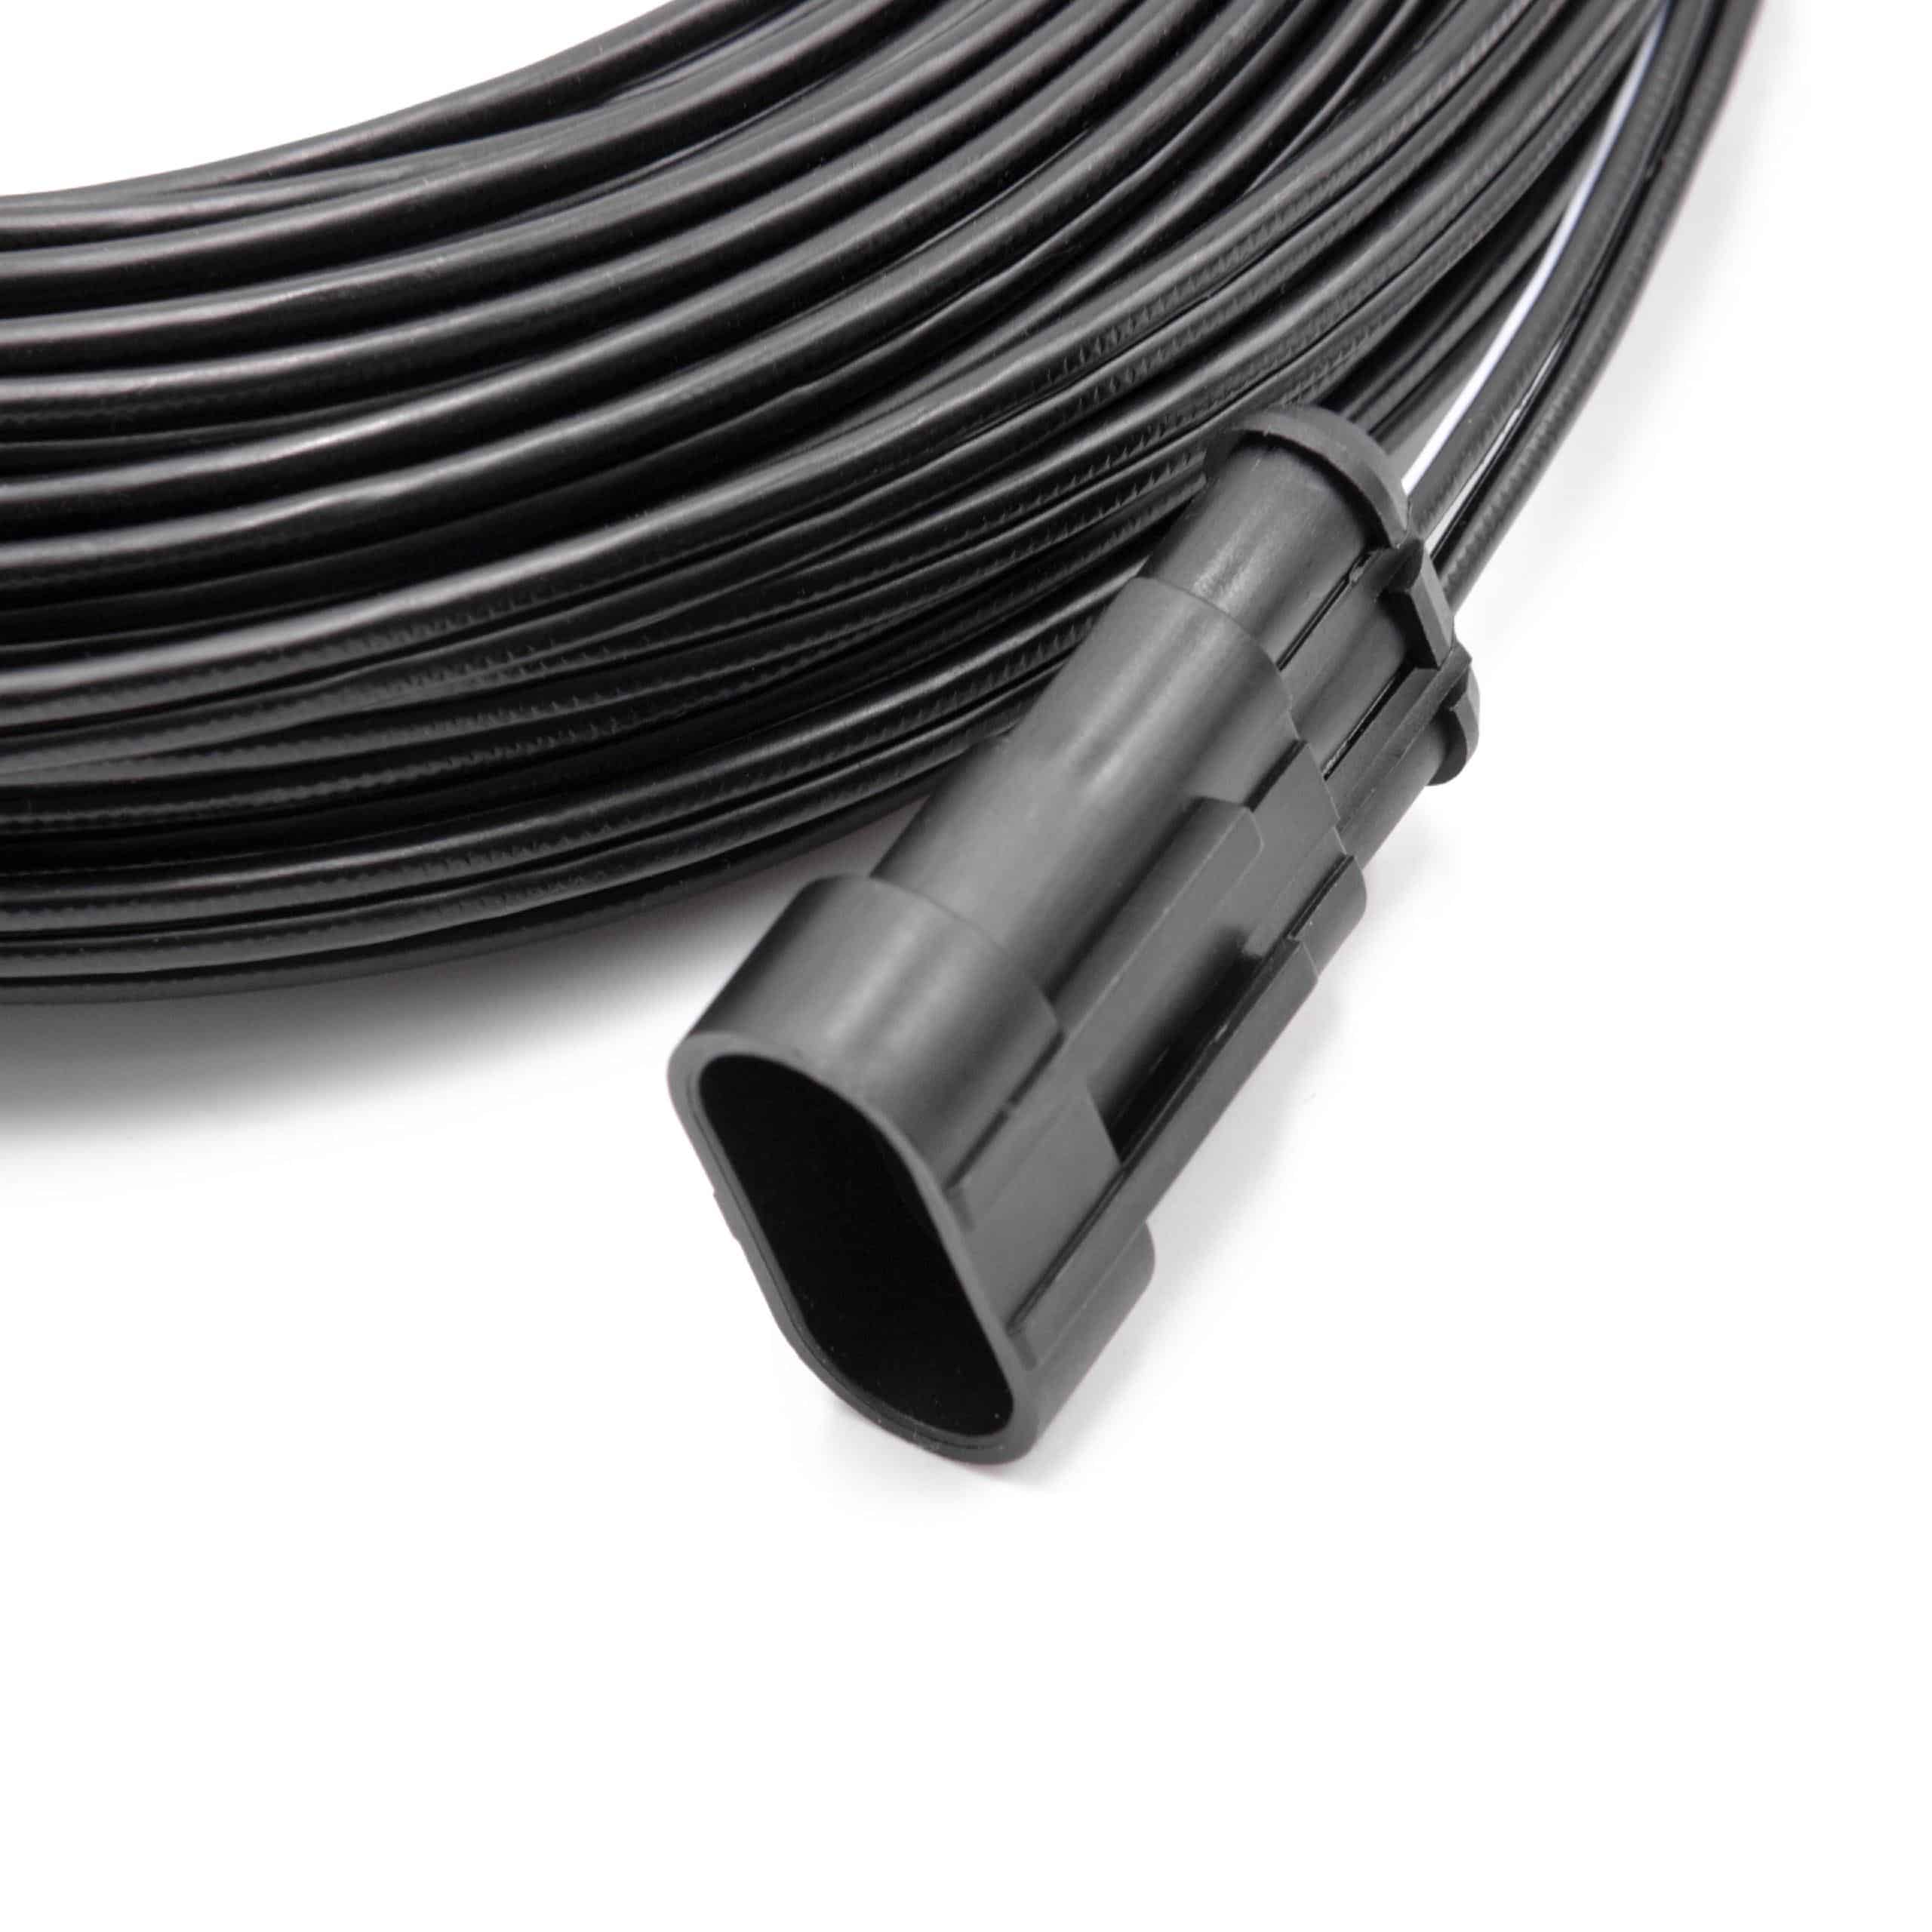 Low Voltage Cable replaces Gardena 00057-98.251.01 for McCullochRobot Lawn Mower etc. 20 m